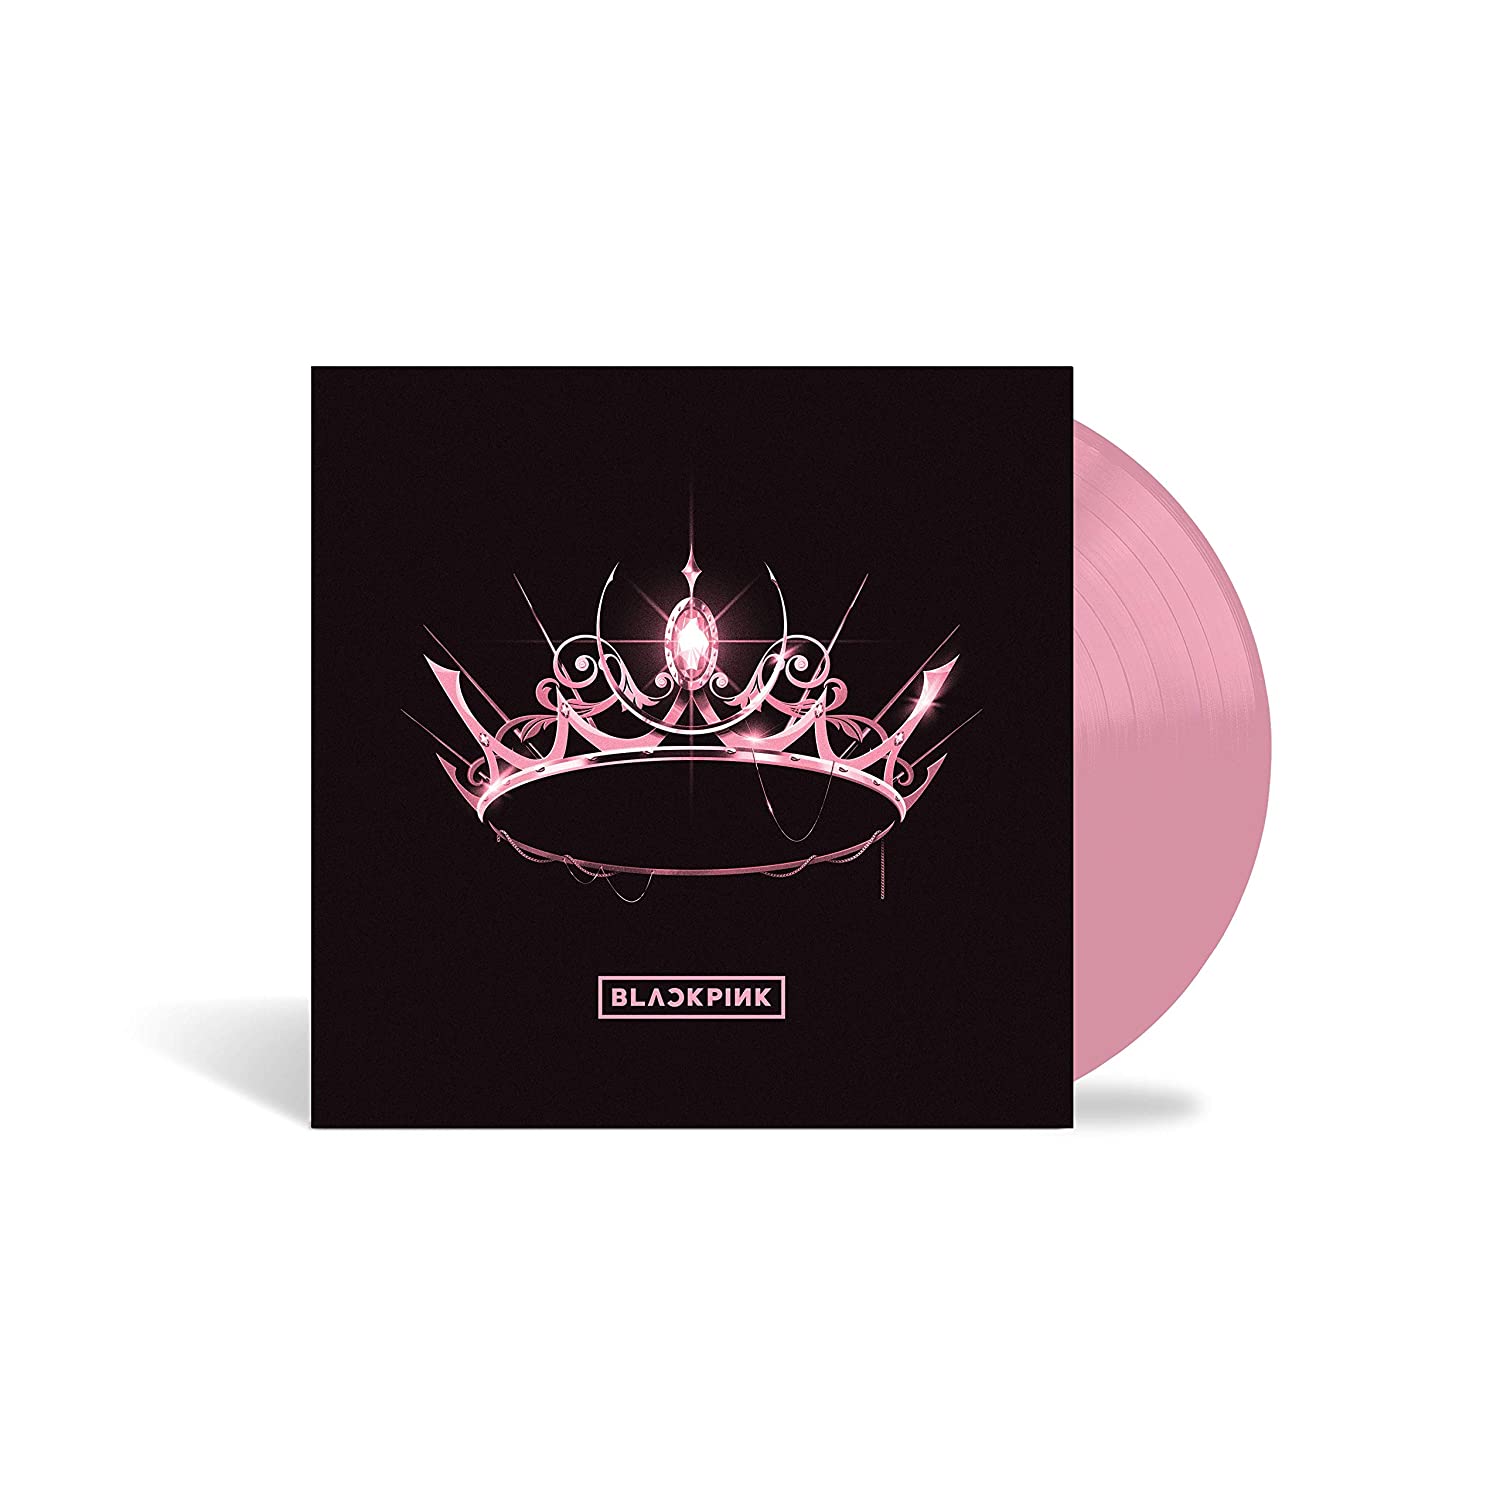 Blackpink: THE ALBUM Pink (Vinyl) $11.50 at Amazon